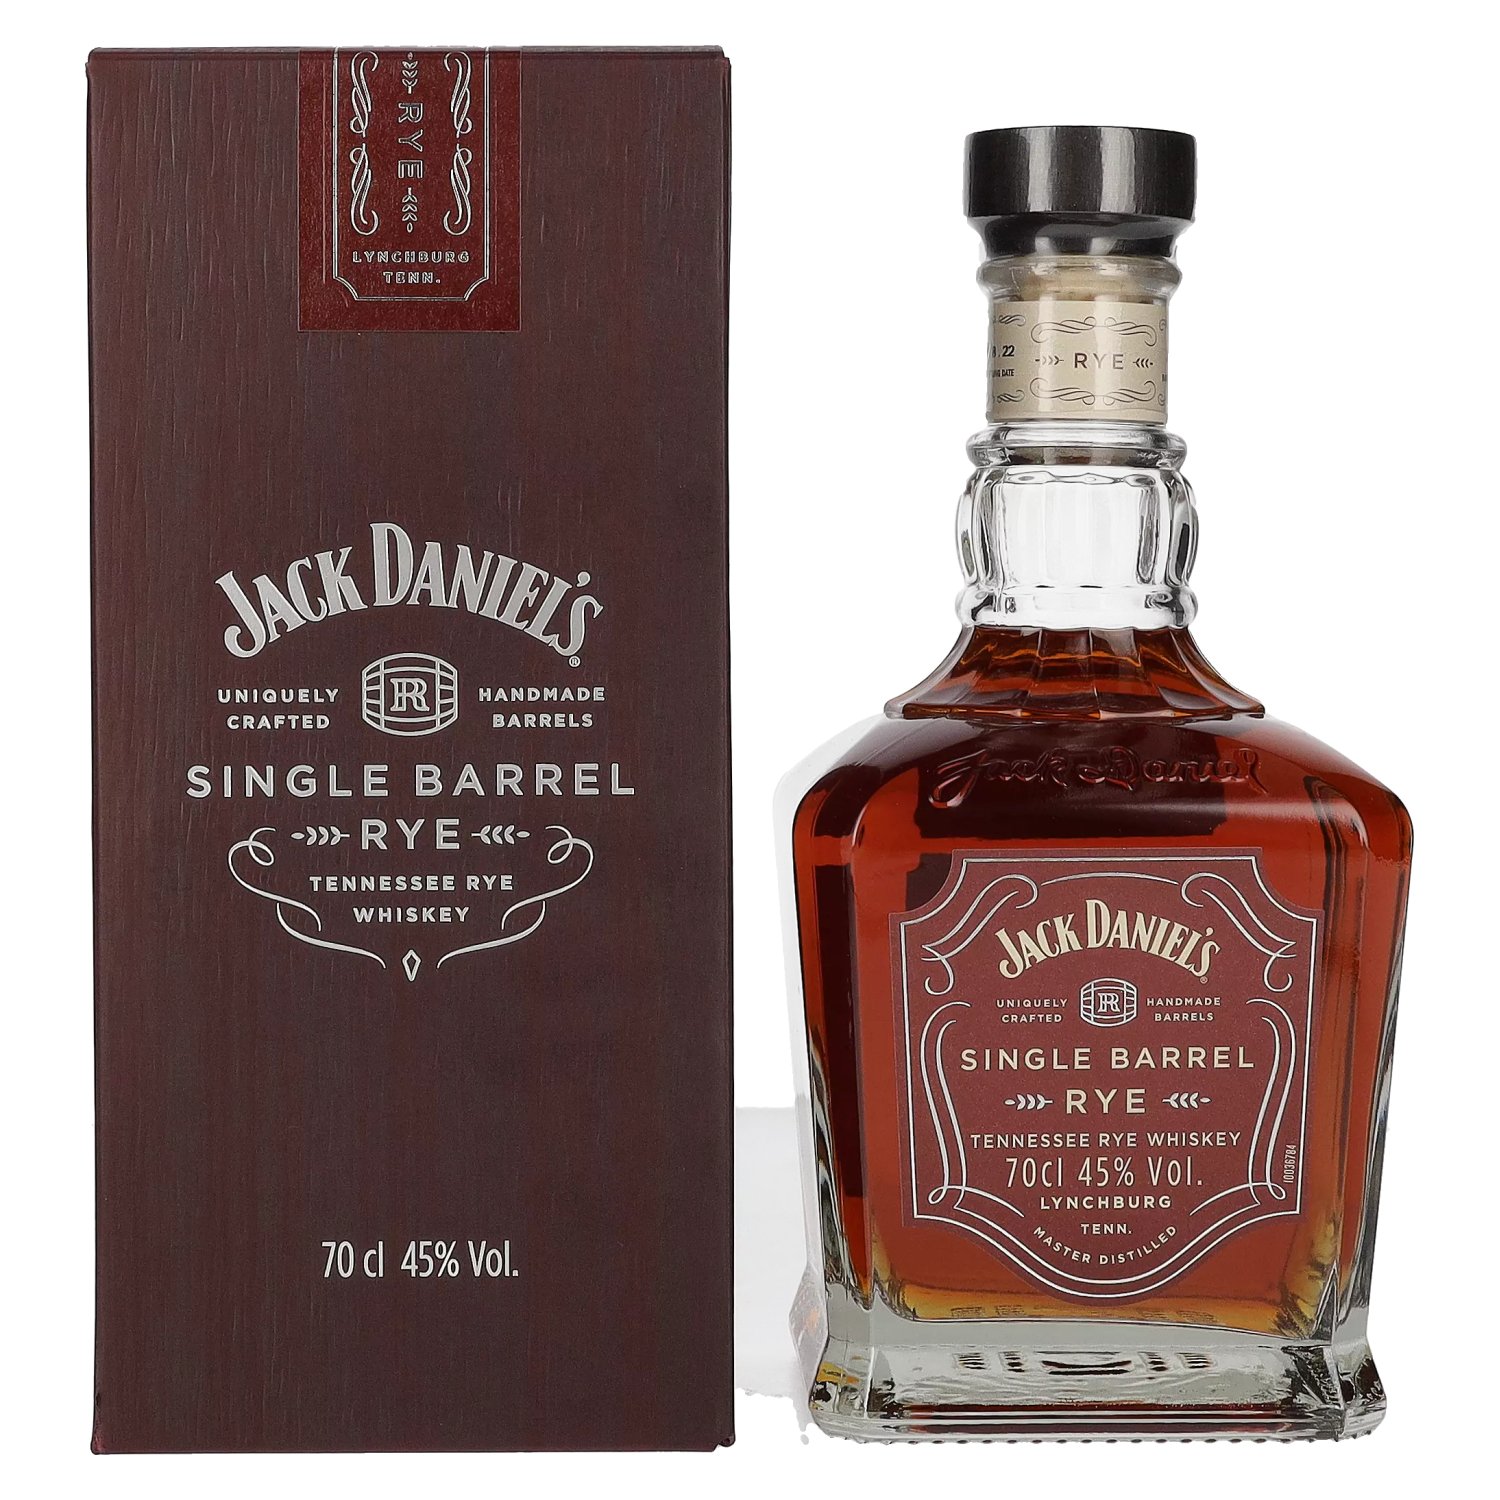 Jack Daniel's Tennessee SINGLE BARREL RYE Whiskey 45% Vol. 0,7l in Giftbox